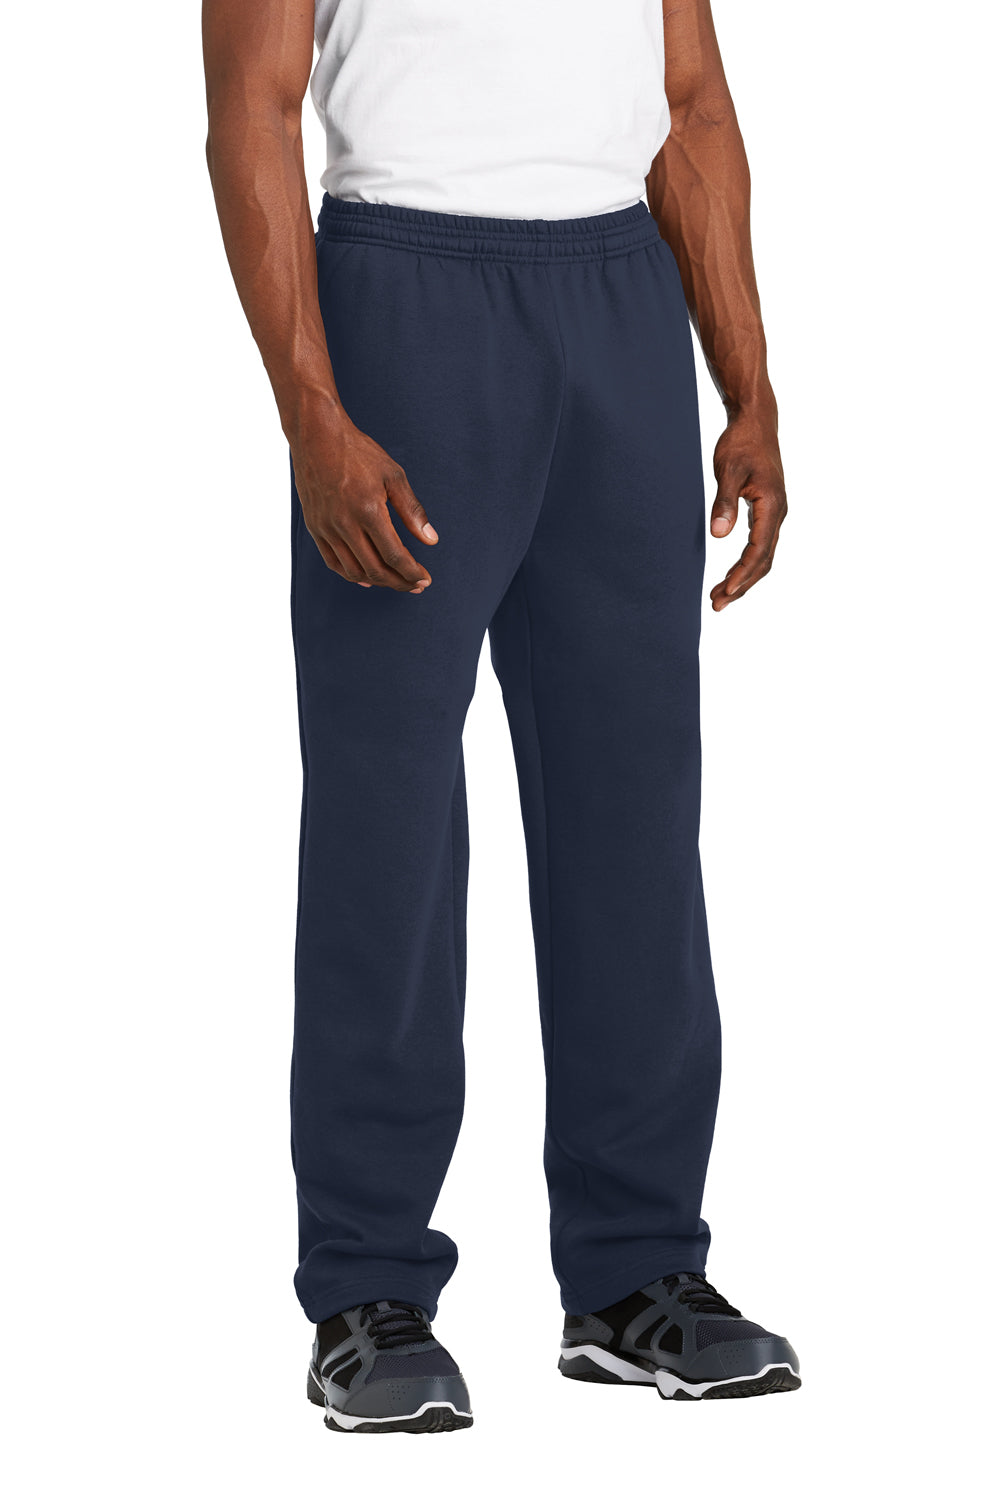 Sport-Tek ST257 Open Bottom Sweatpants w/ Pockets True Navy Blue 3Q